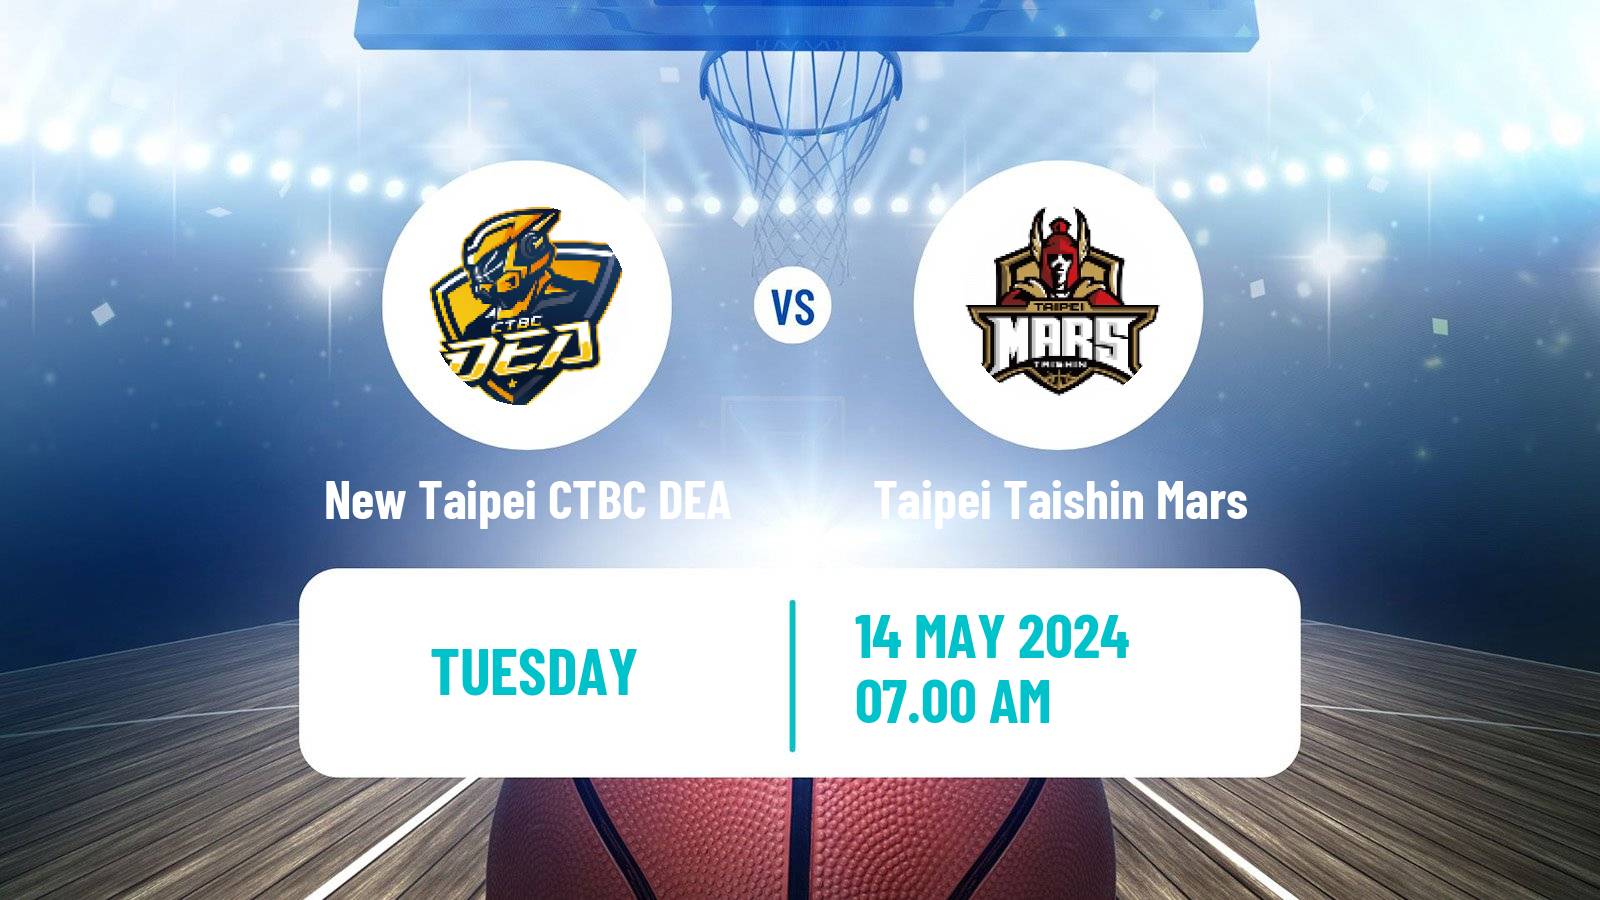 Basketball Taiwan T1 League Basketball New Taipei CTBC DEA - Taipei Taishin Mars